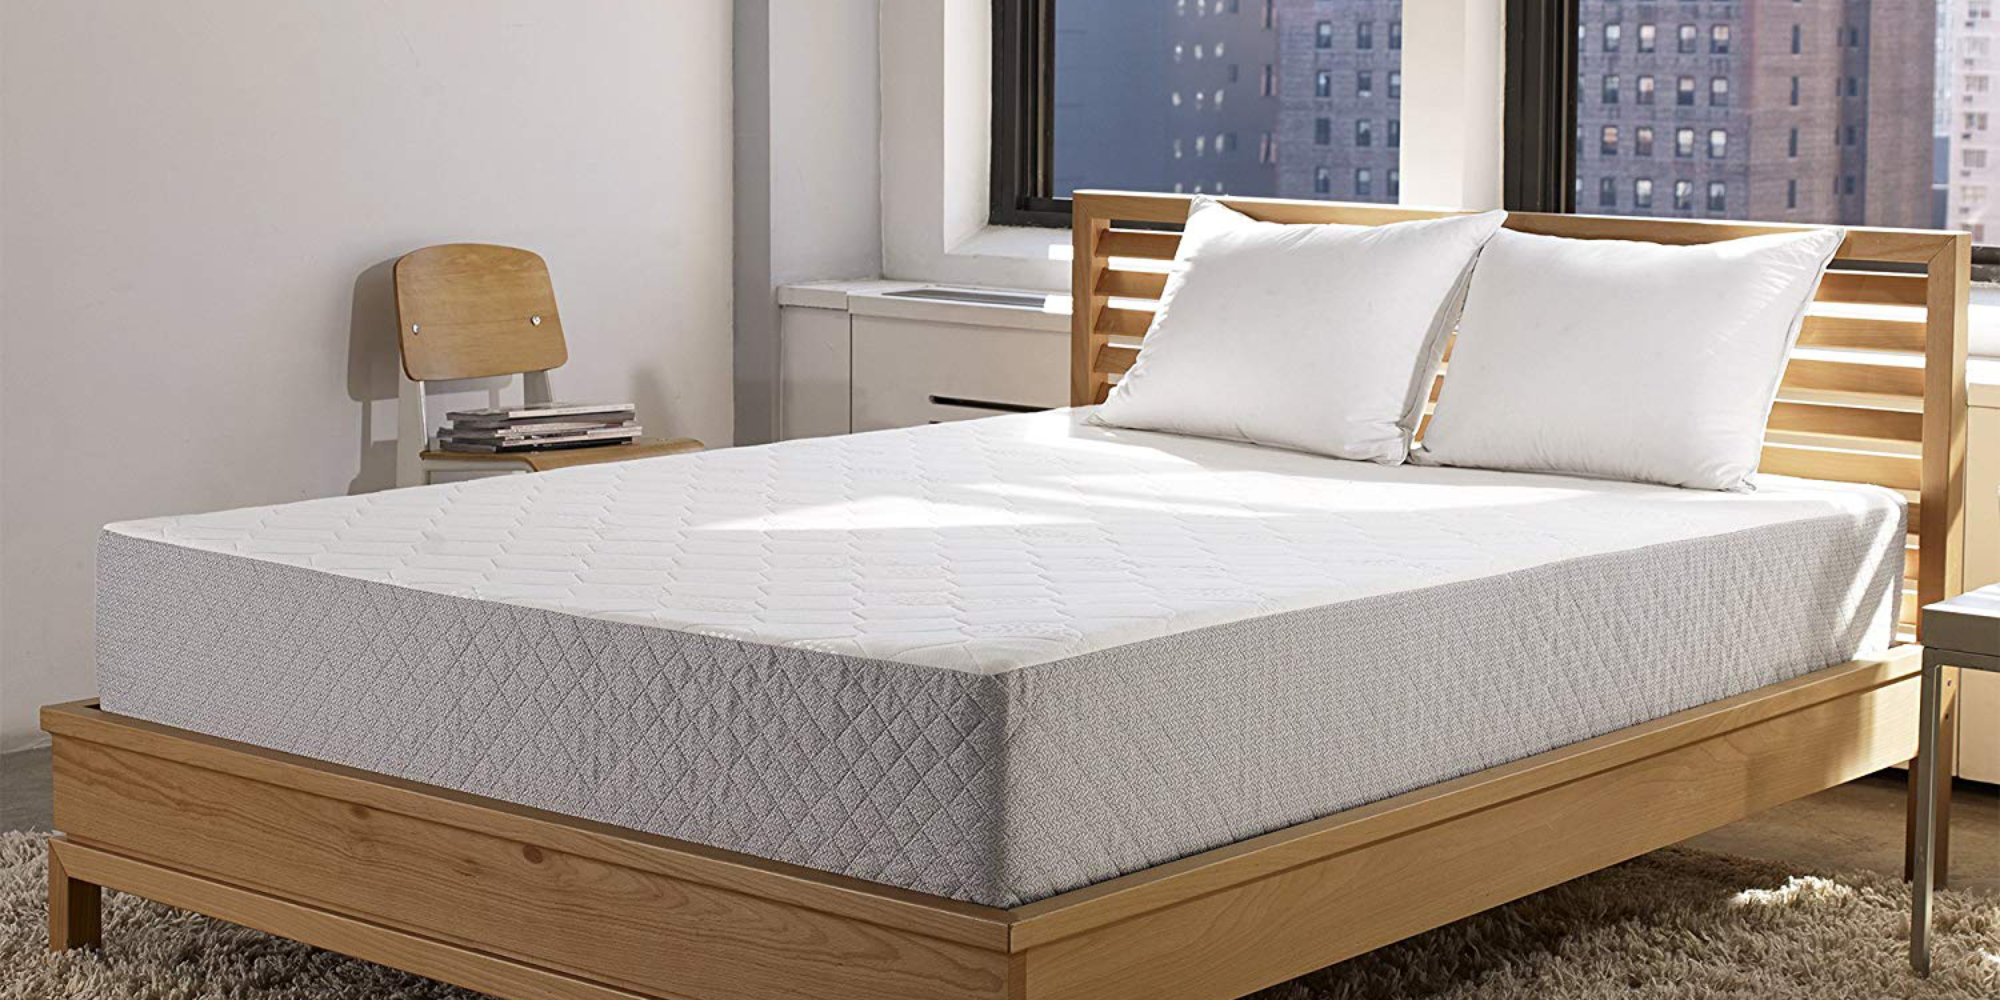 sleep innovations queen mattress costco